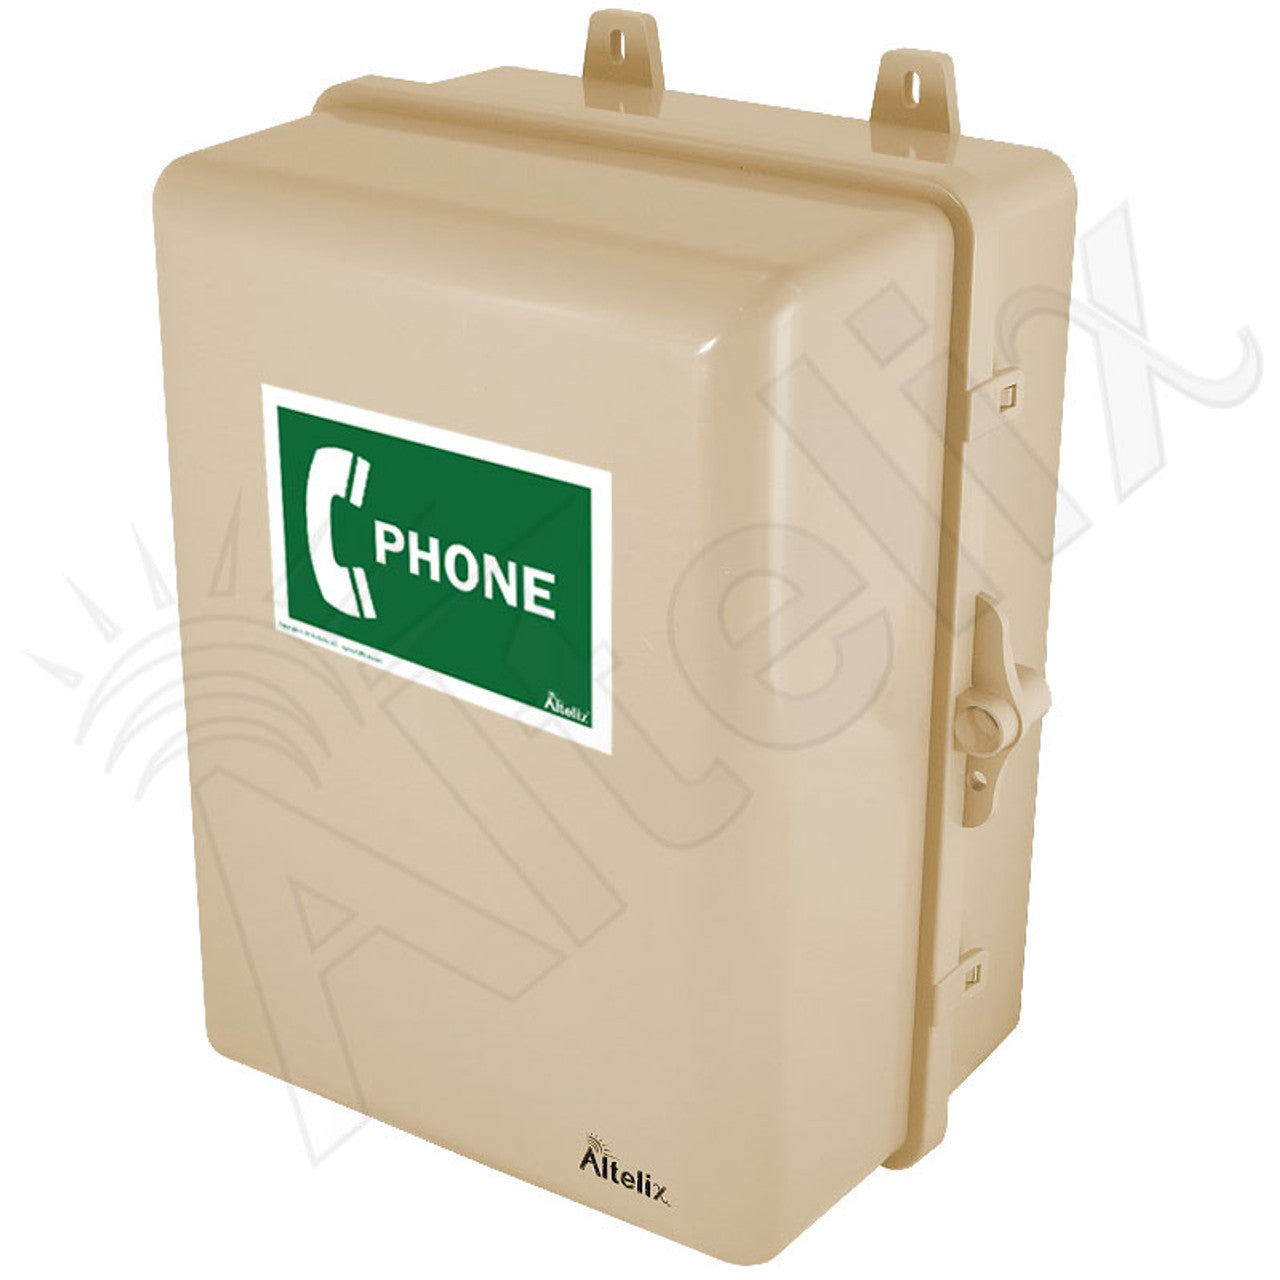 Altelix 12x9x7 IP66 NEMA 4X Outdoor Weatherproof Phone Call Box with Phone Label-4